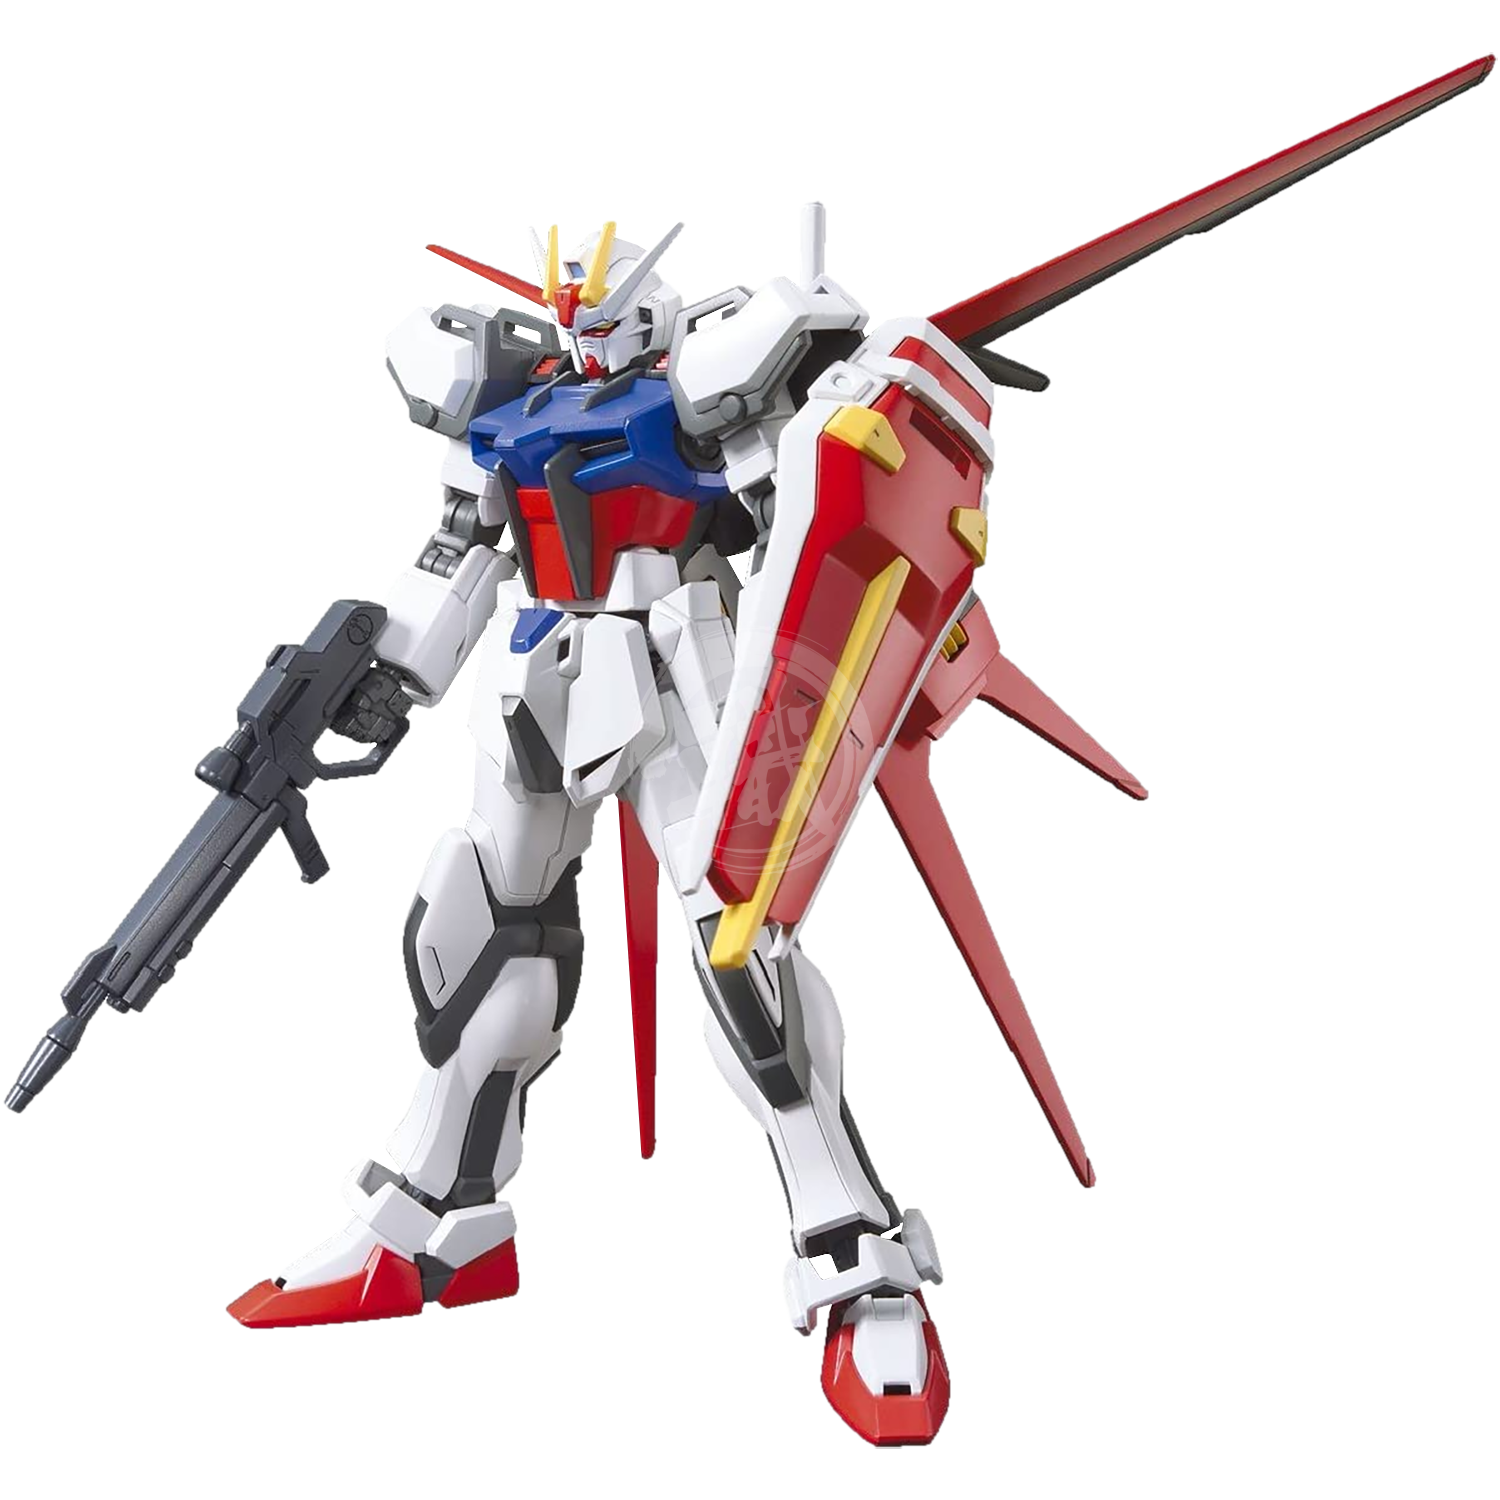 HG Aile Strike Gundam (HG Cosmic Era) - ShokuninGunpla